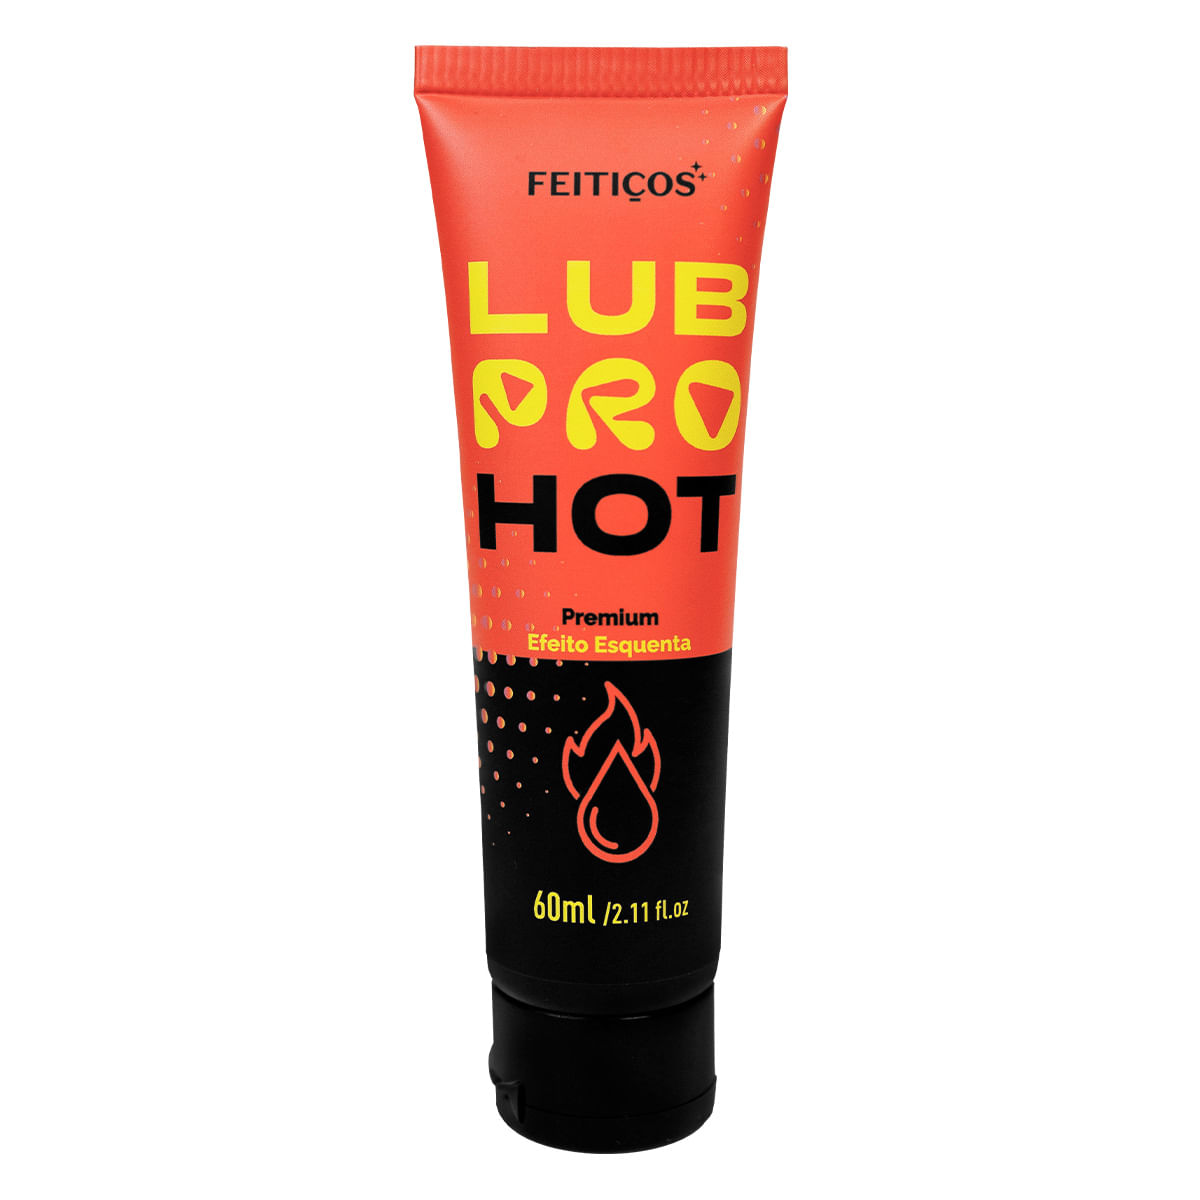 LubPro Hot Premium Lubrificante Efeito Quente 60ml Feitiços Aromáticos